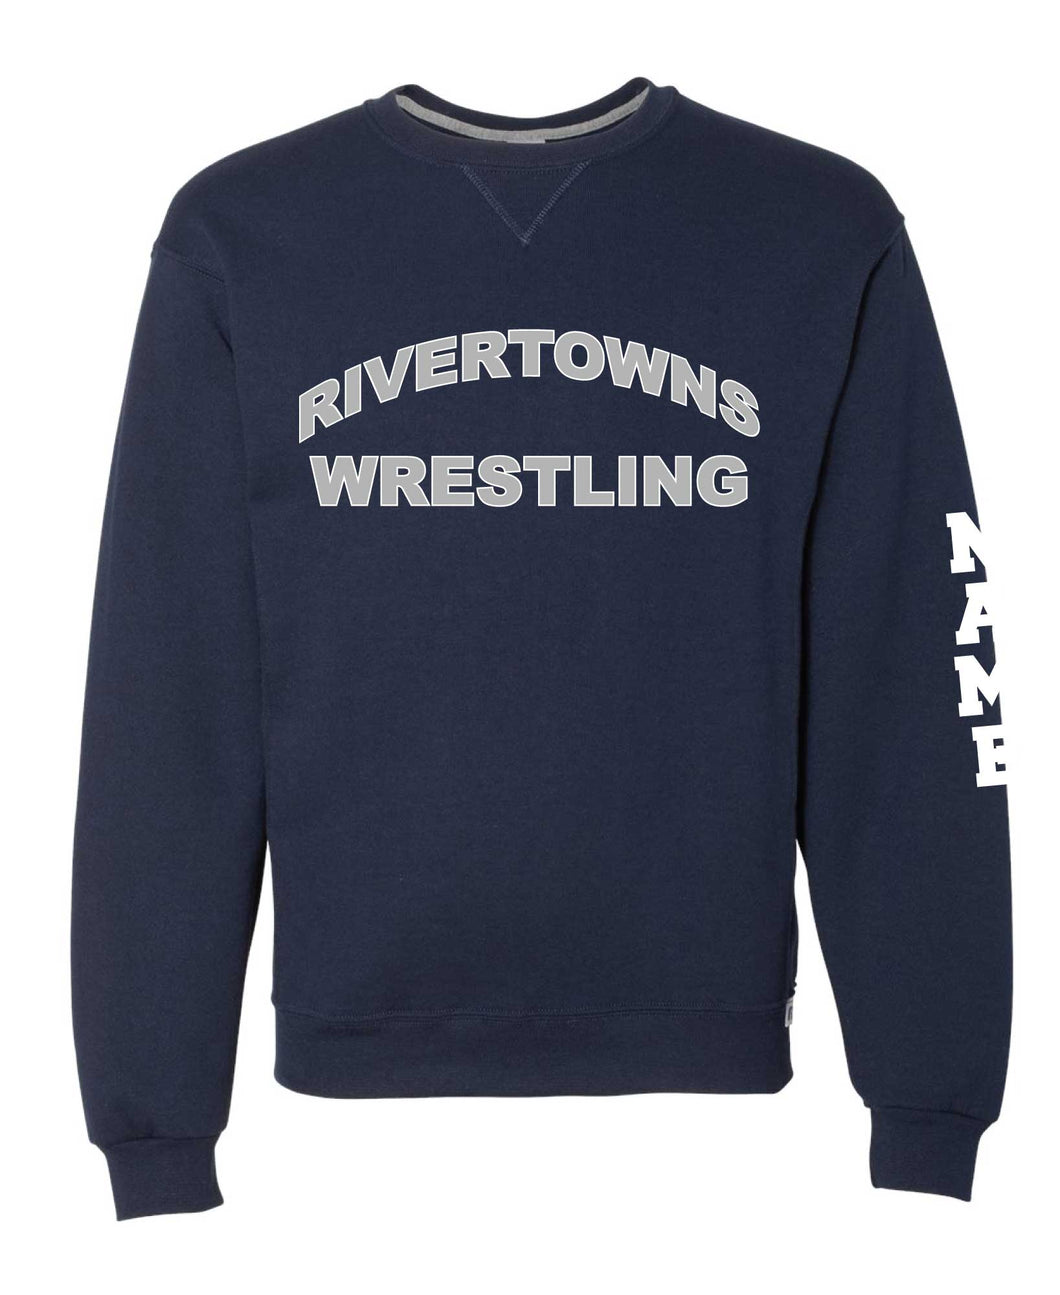 Rivertowns Wrestling Russell Athletic Cotton Crewneck Sweatshirt - Navy - 5KounT